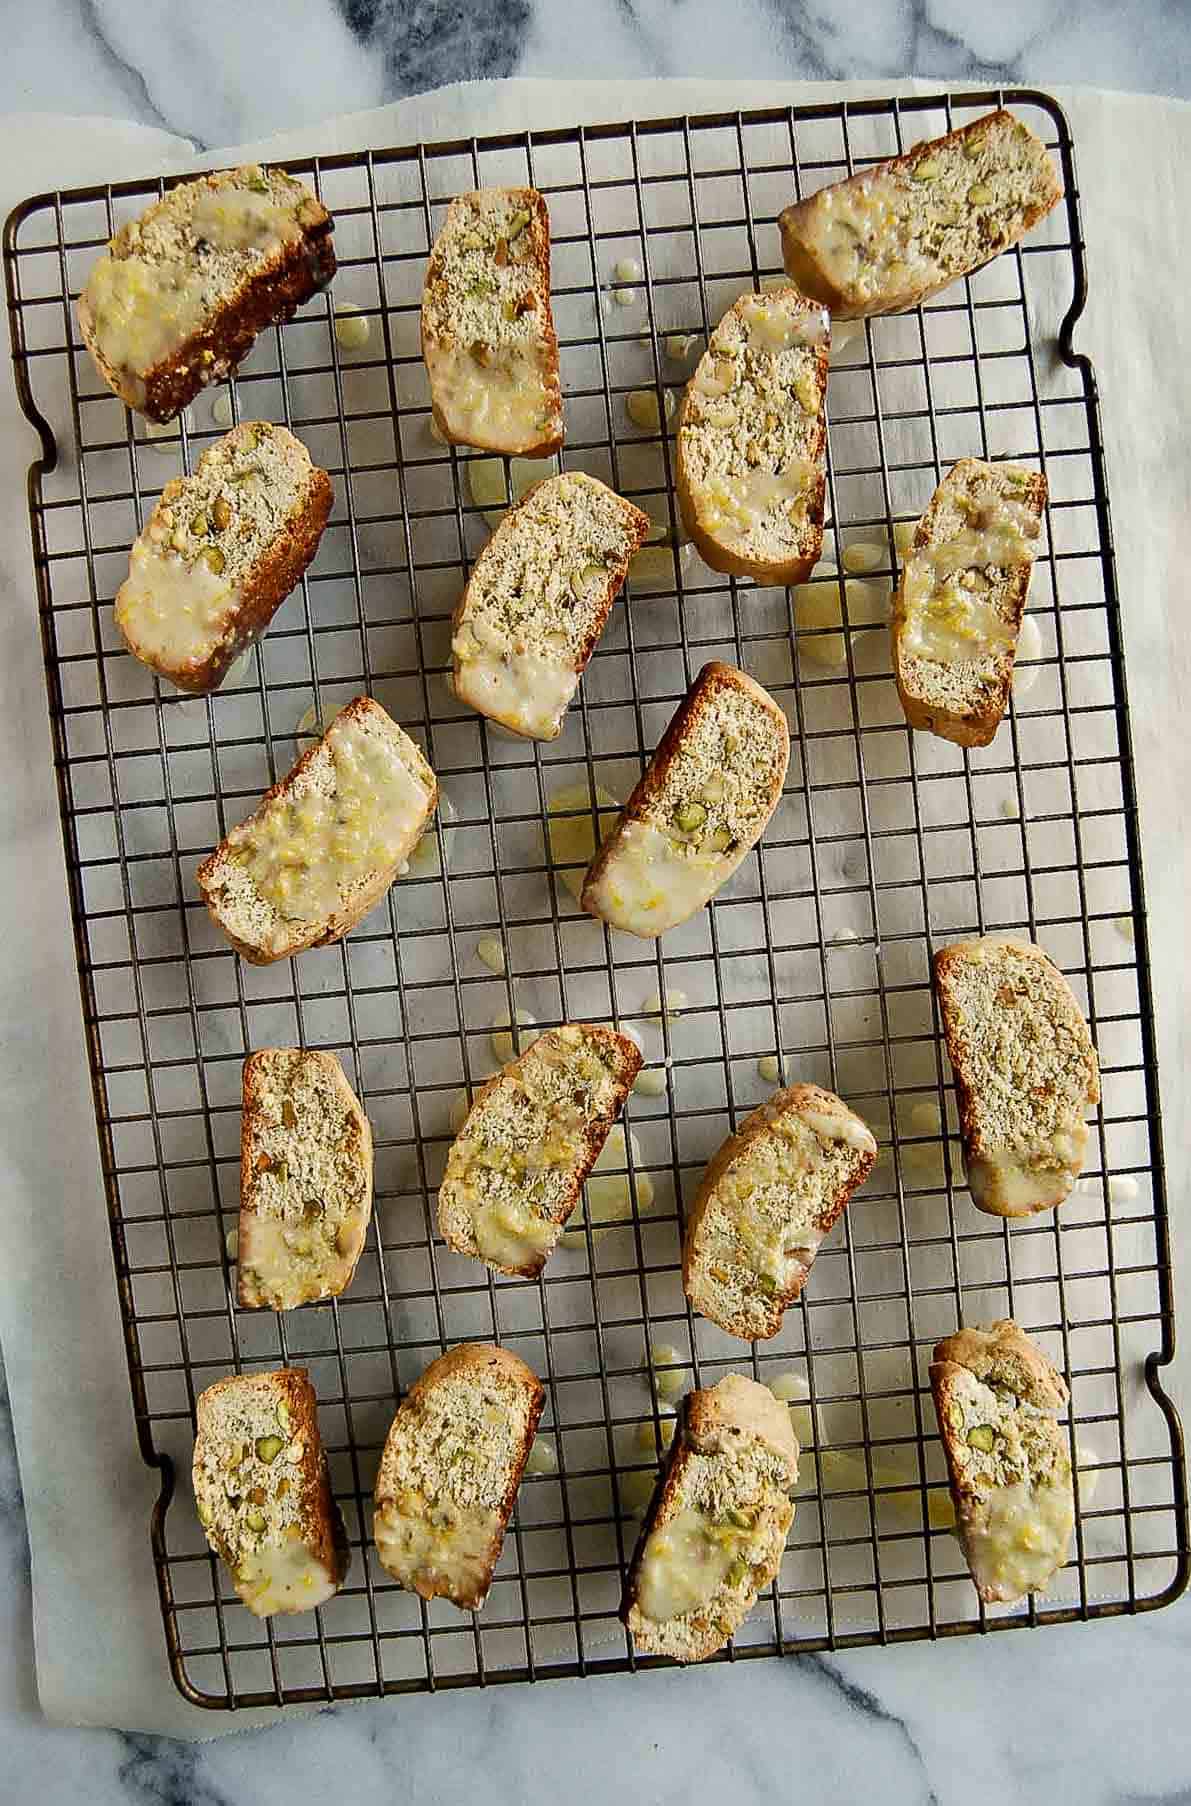 lemon glazed lemon biscotti cookies with pistachios on cooling racks.